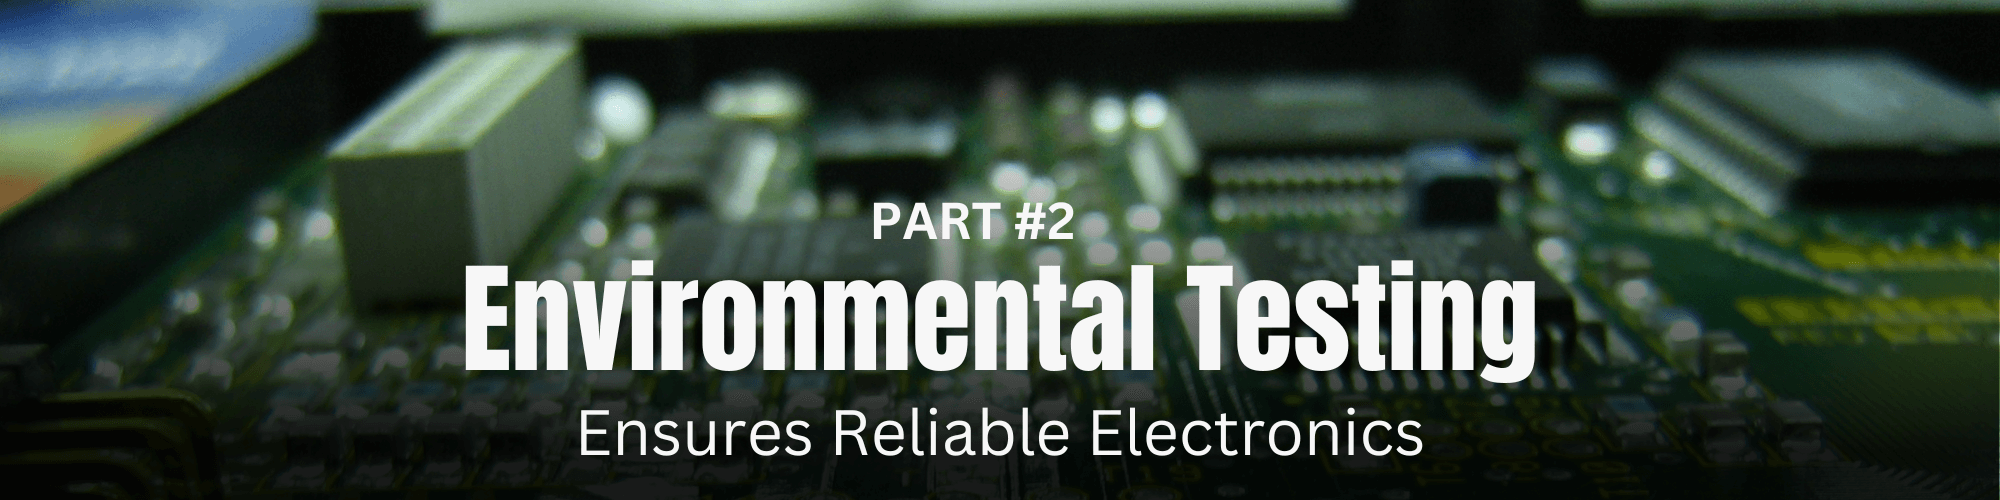 P2_Environmental_Testing _Ensures_Reliable_Electronics